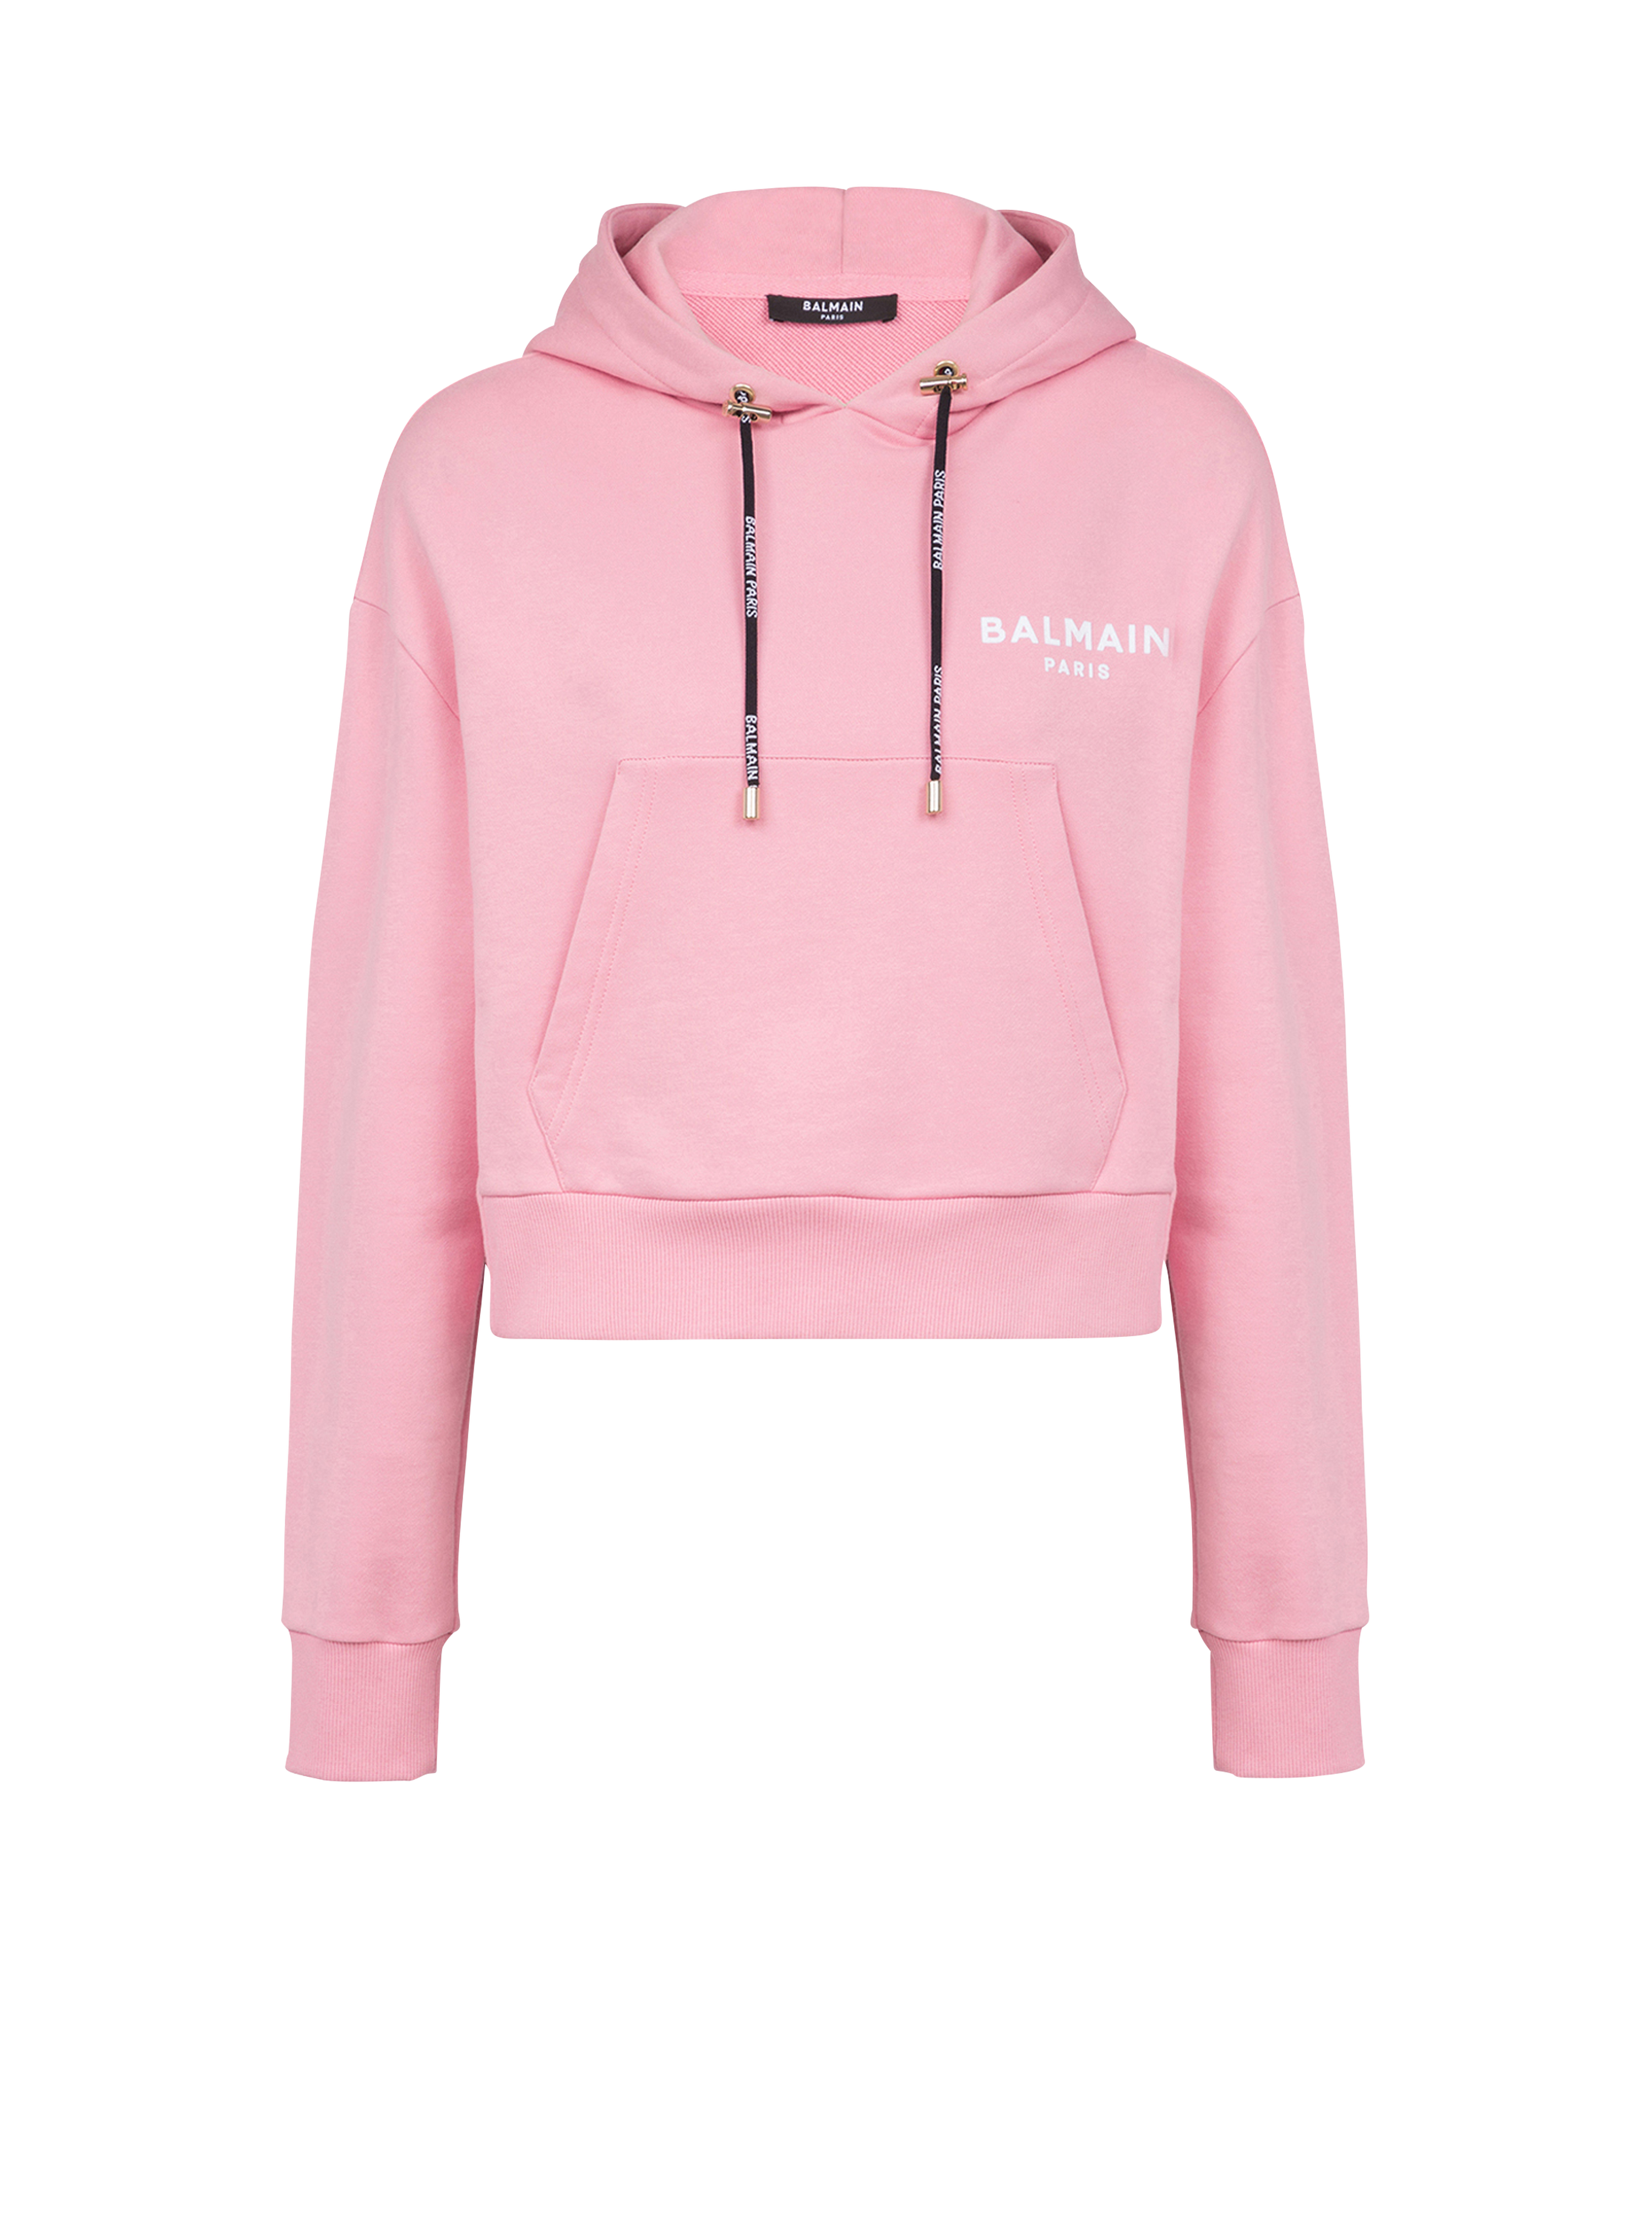 Eco-designed cotton sweatshirt with flocked Balmain logo, pink